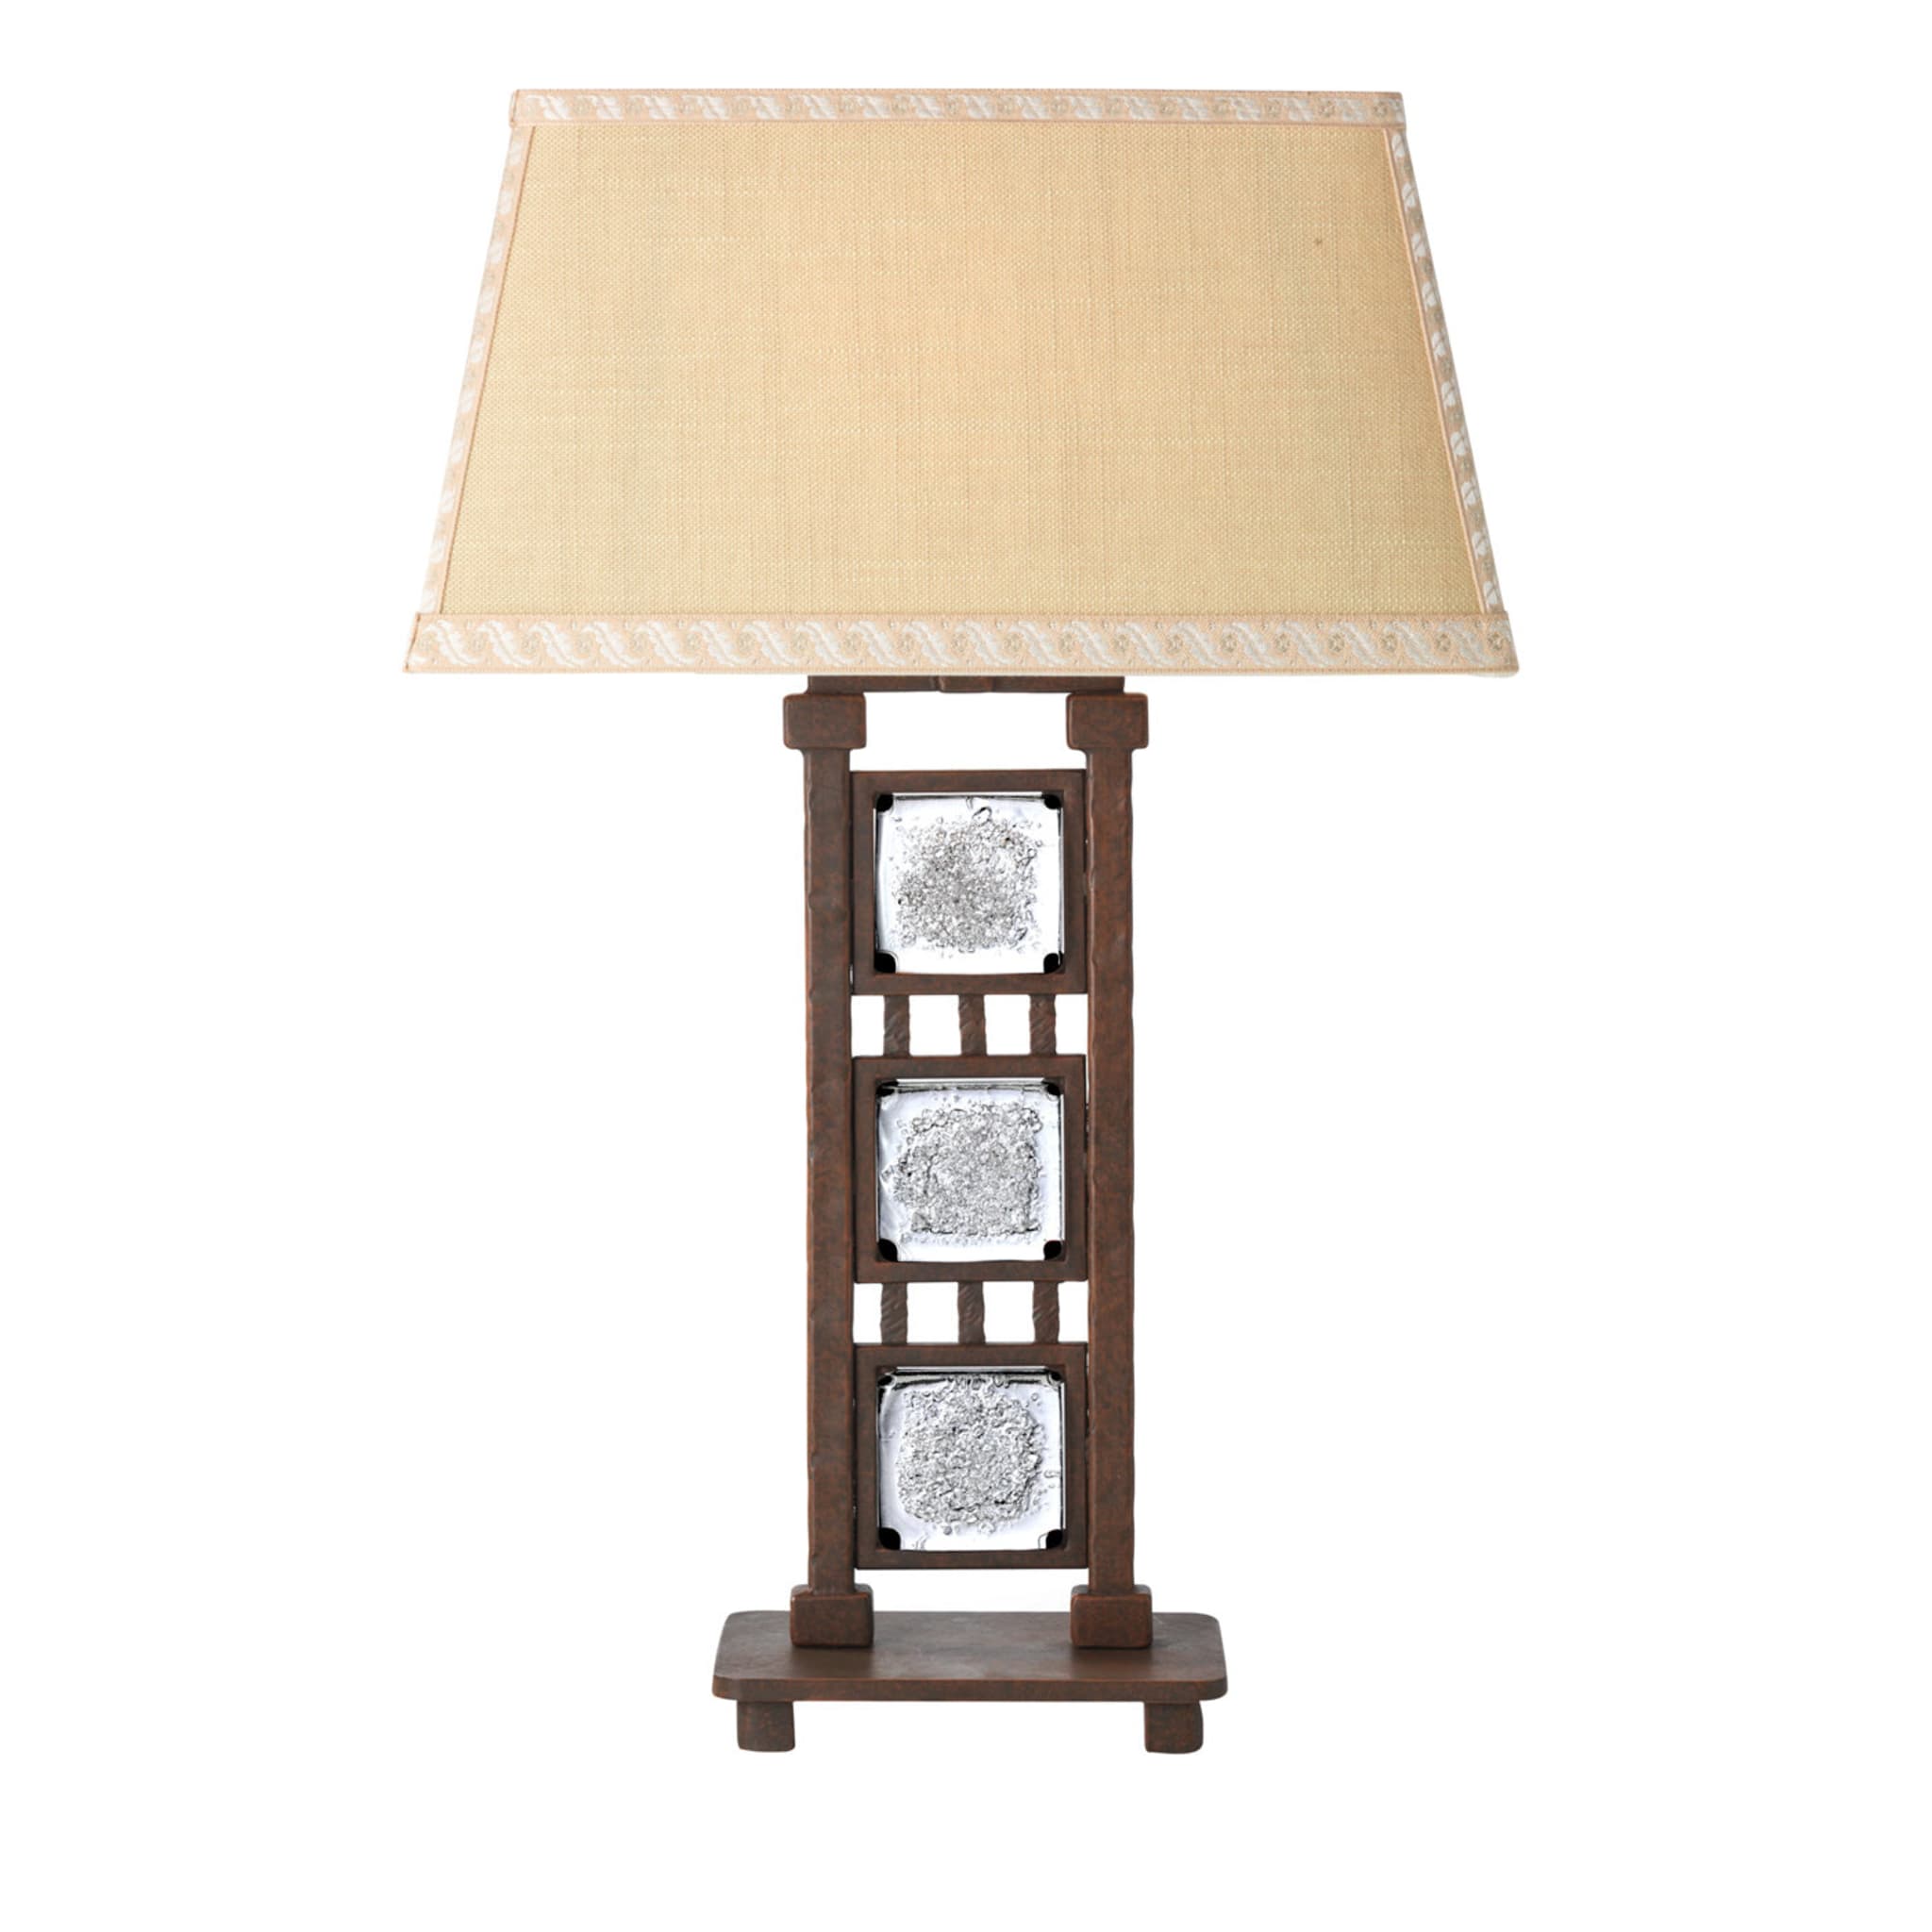 Classic Rust Table Lamp - Main view